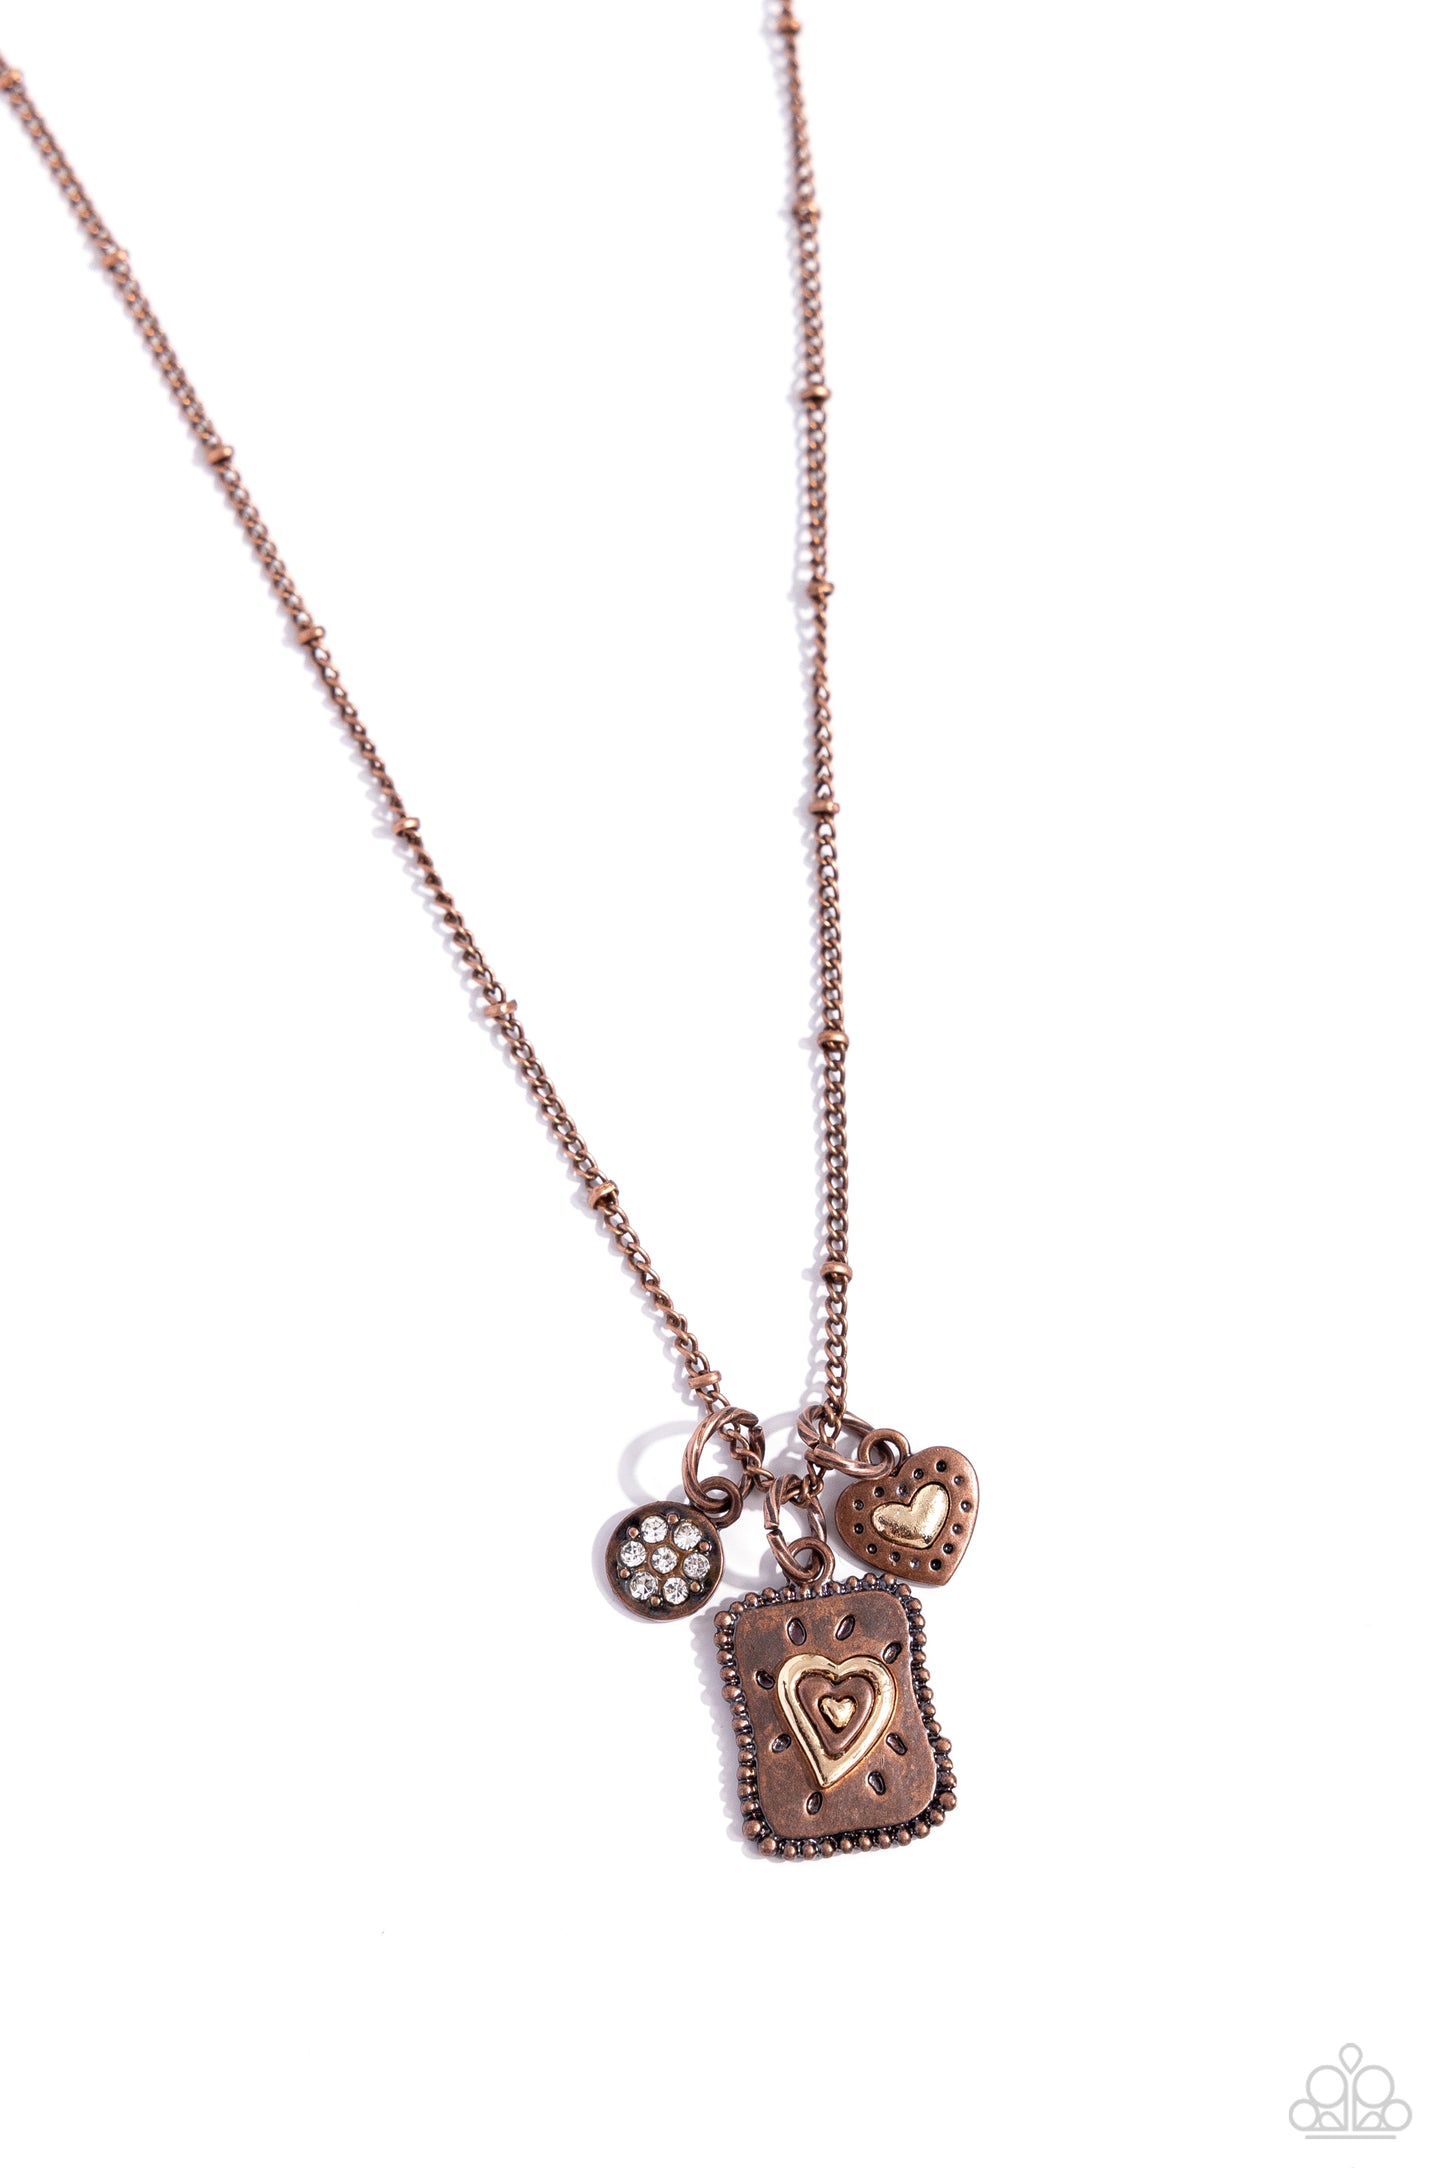 Antiqued Admiration - copper - Paparazzi necklace